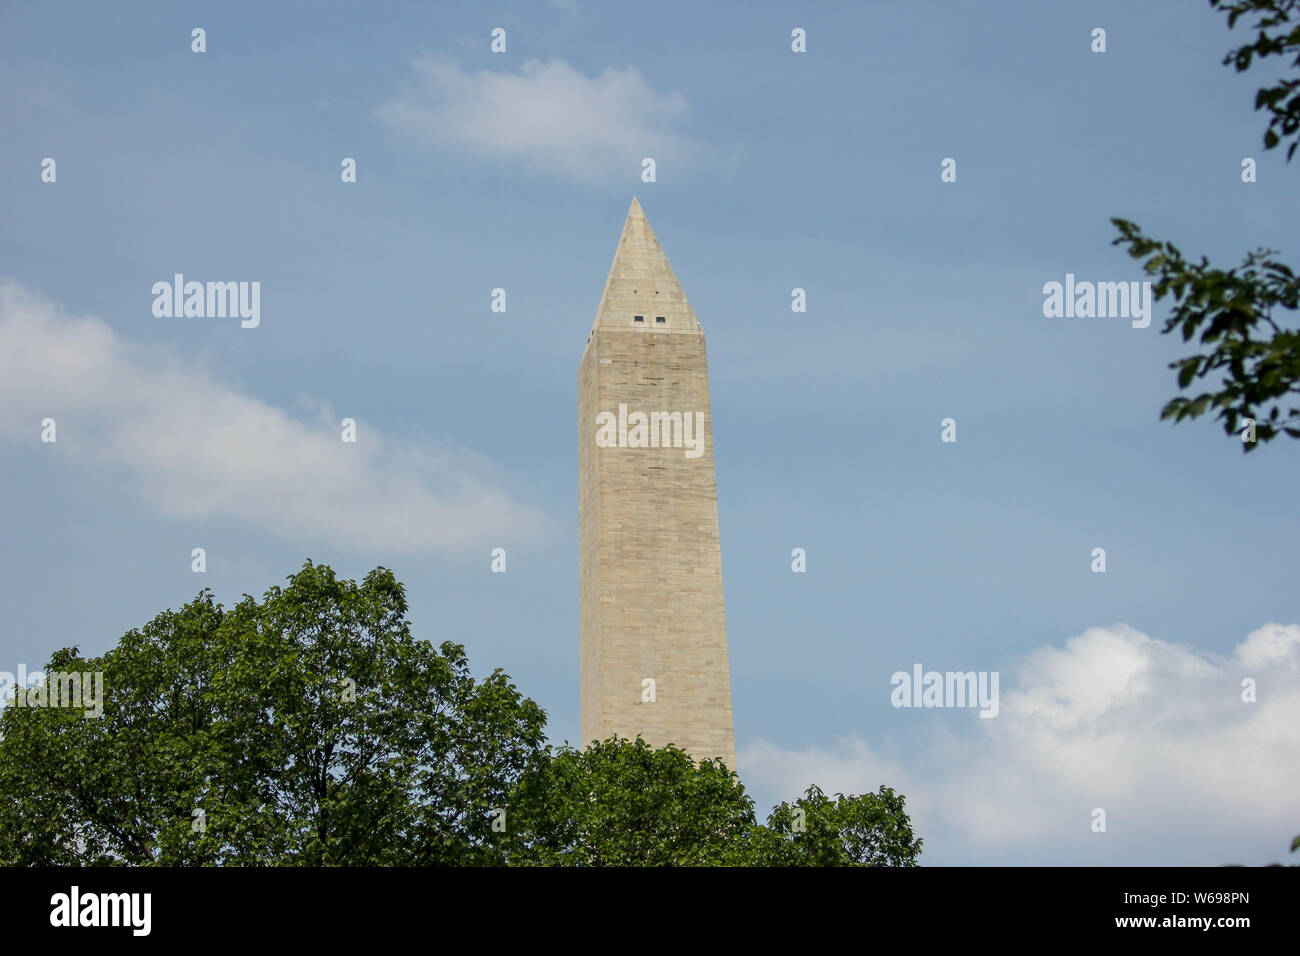 El Monumento a Washington, en Washington, DC, Estados Unidos Foto de stock